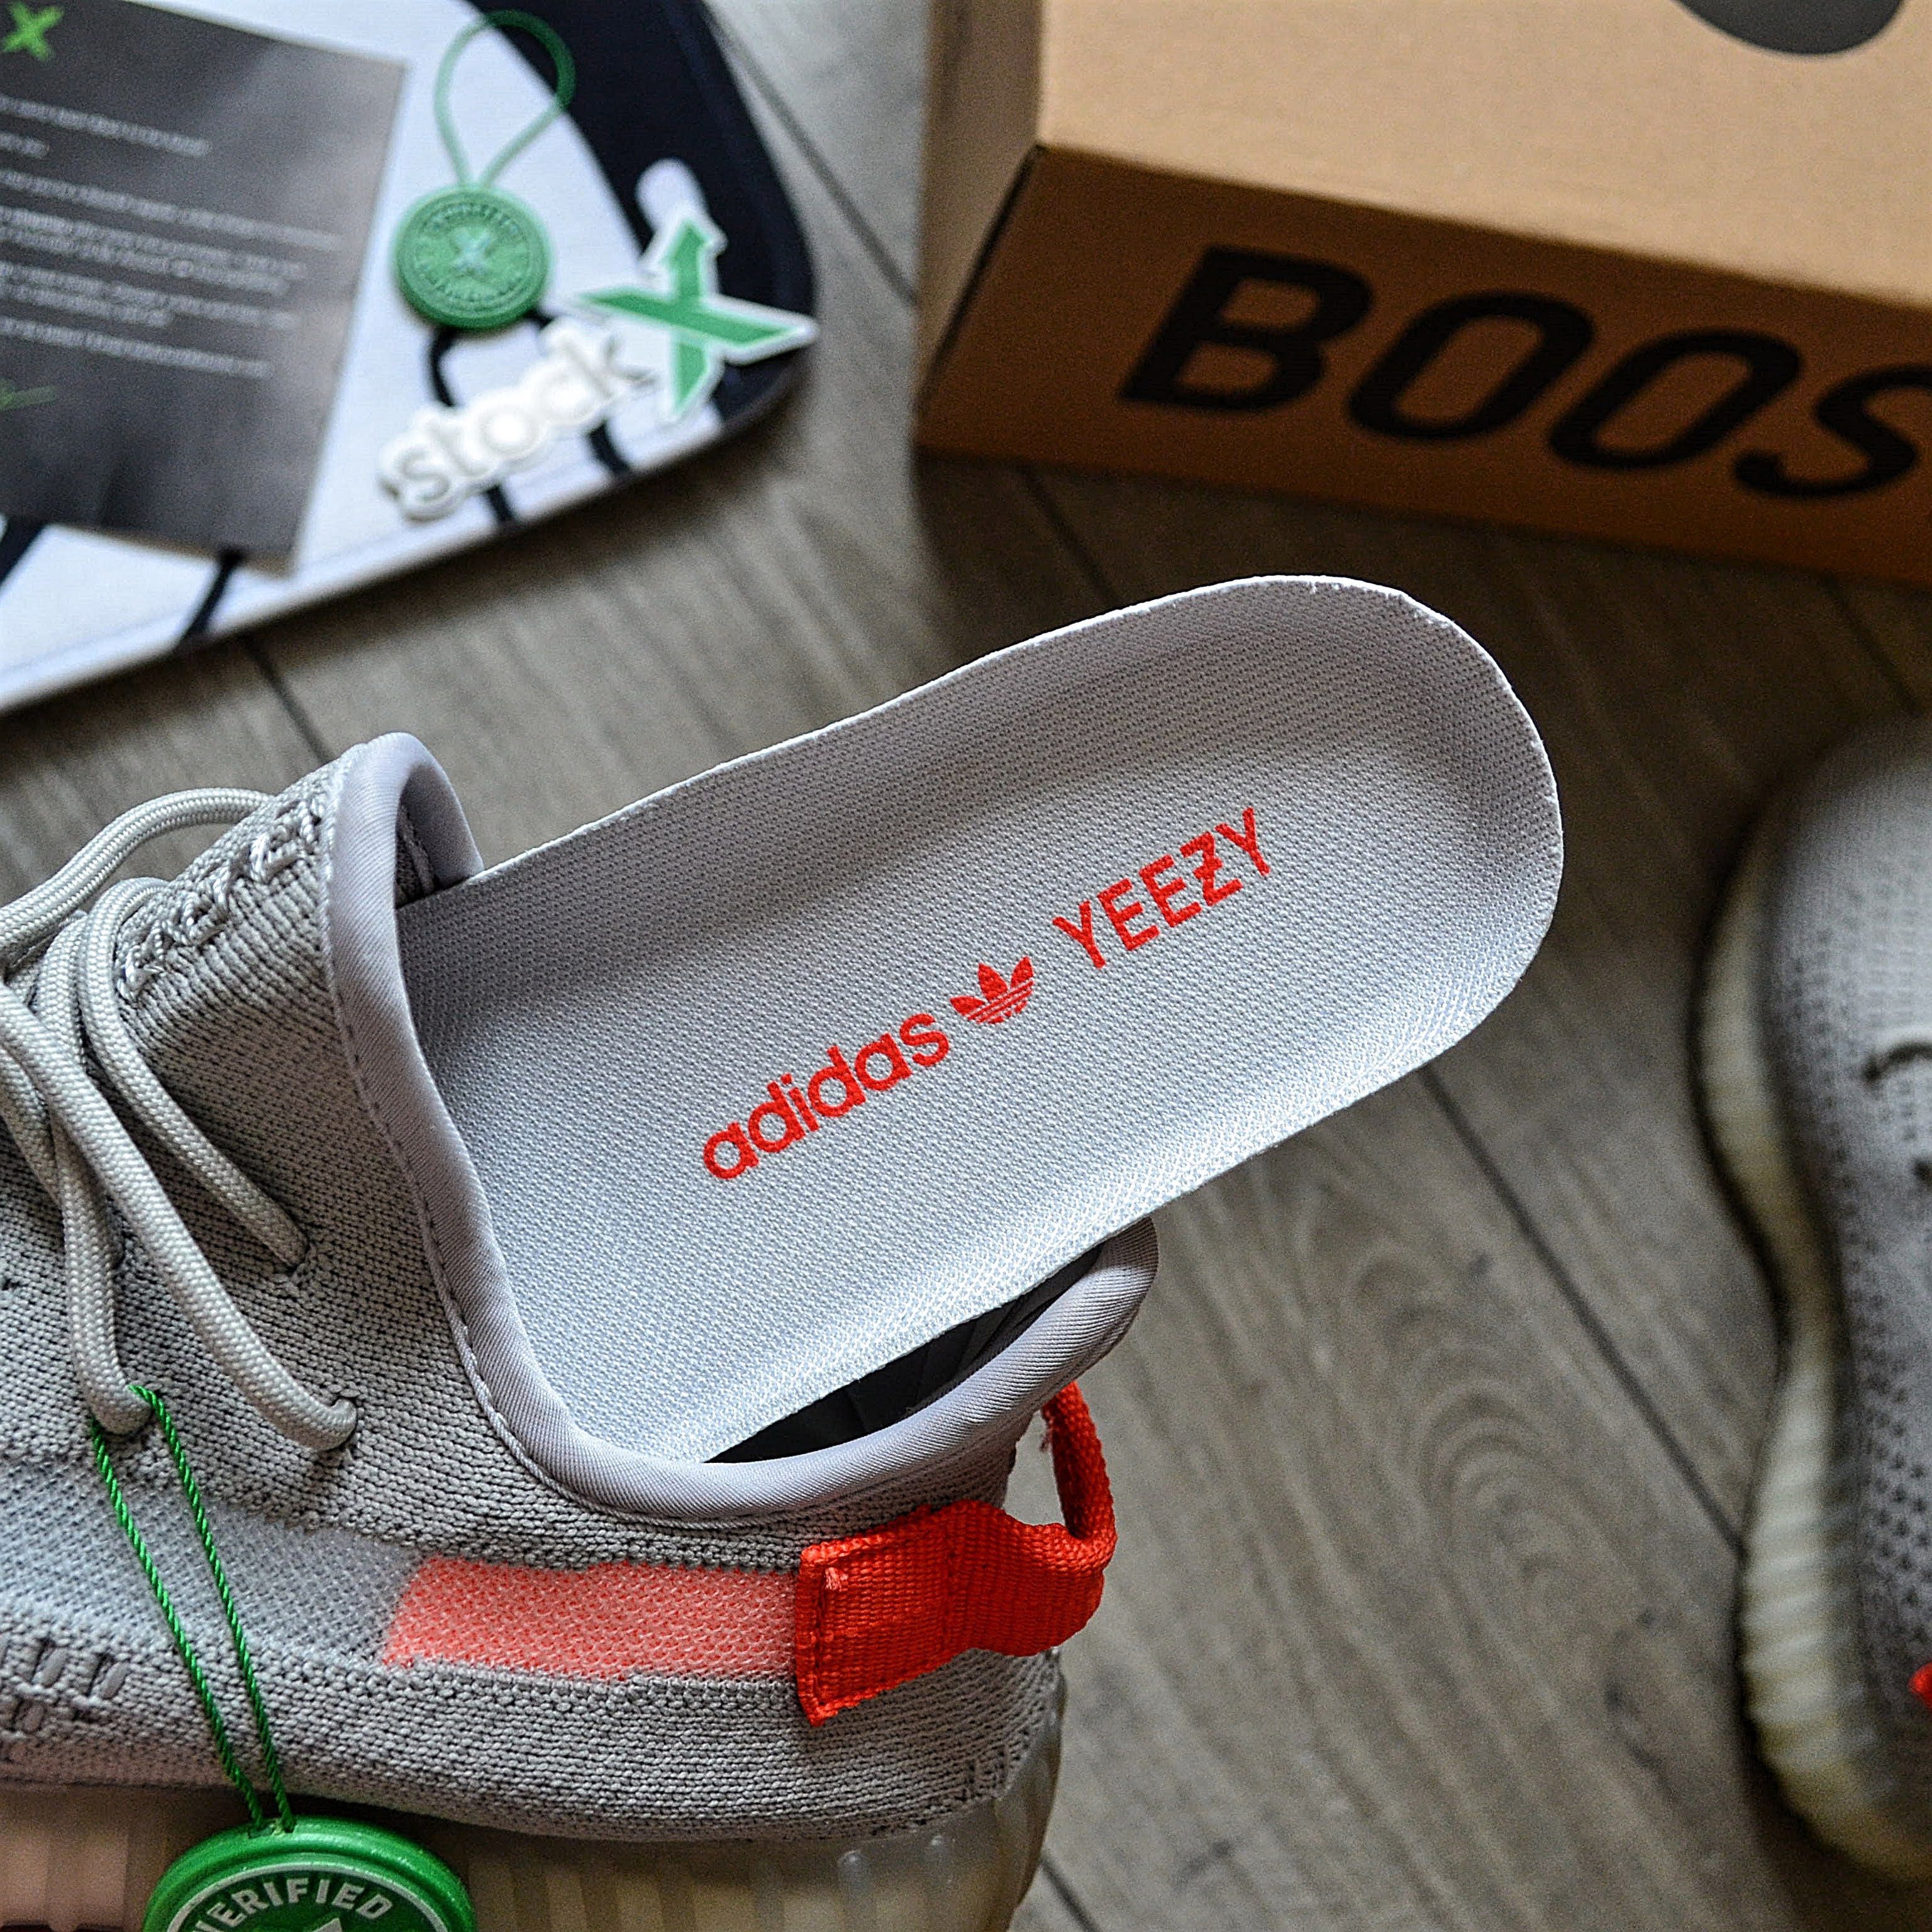 Мужские кроссовки Adidas Yeezy Boost 350 V2 'Tail Light' Размеры 40-45